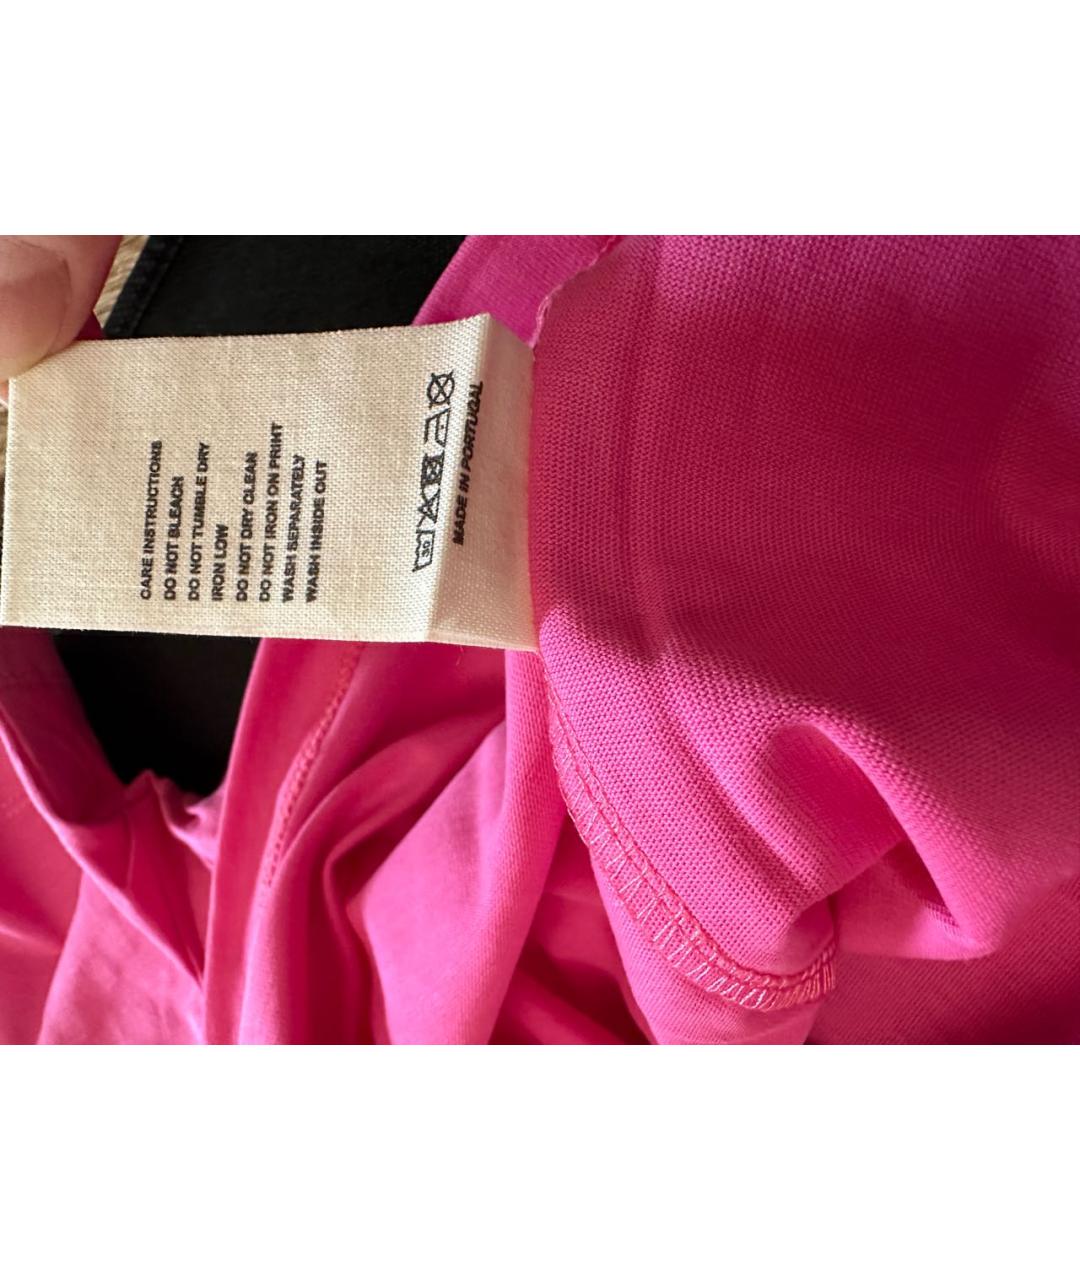 THE PANGAIA Розовая хлопковая футболка, фото 7